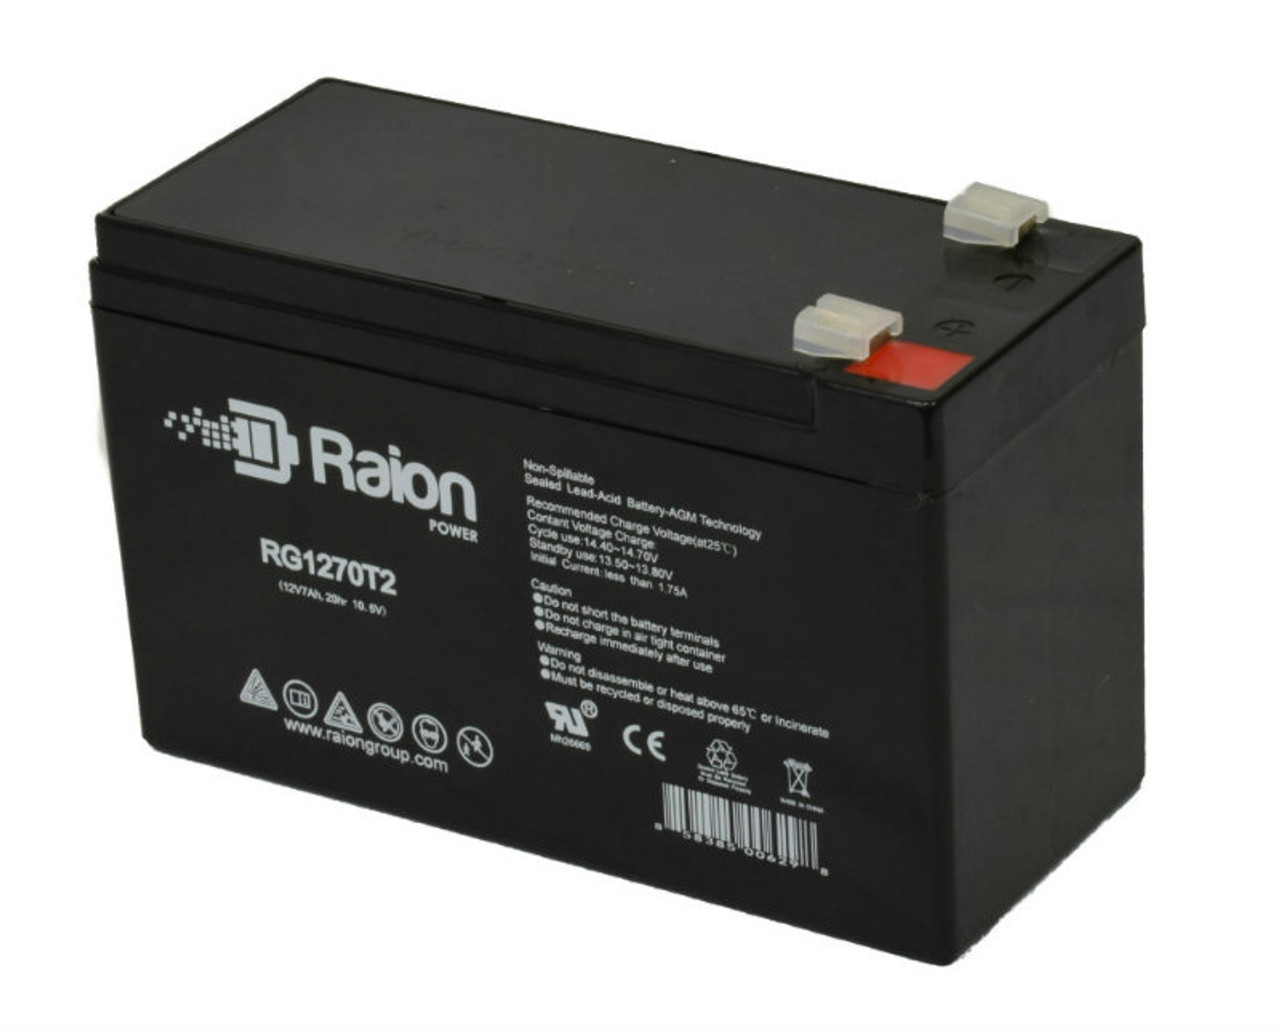 Raion Power Replacement 12V 7Ah Battery for Medtek 550 Blood Pump - 1 Pack